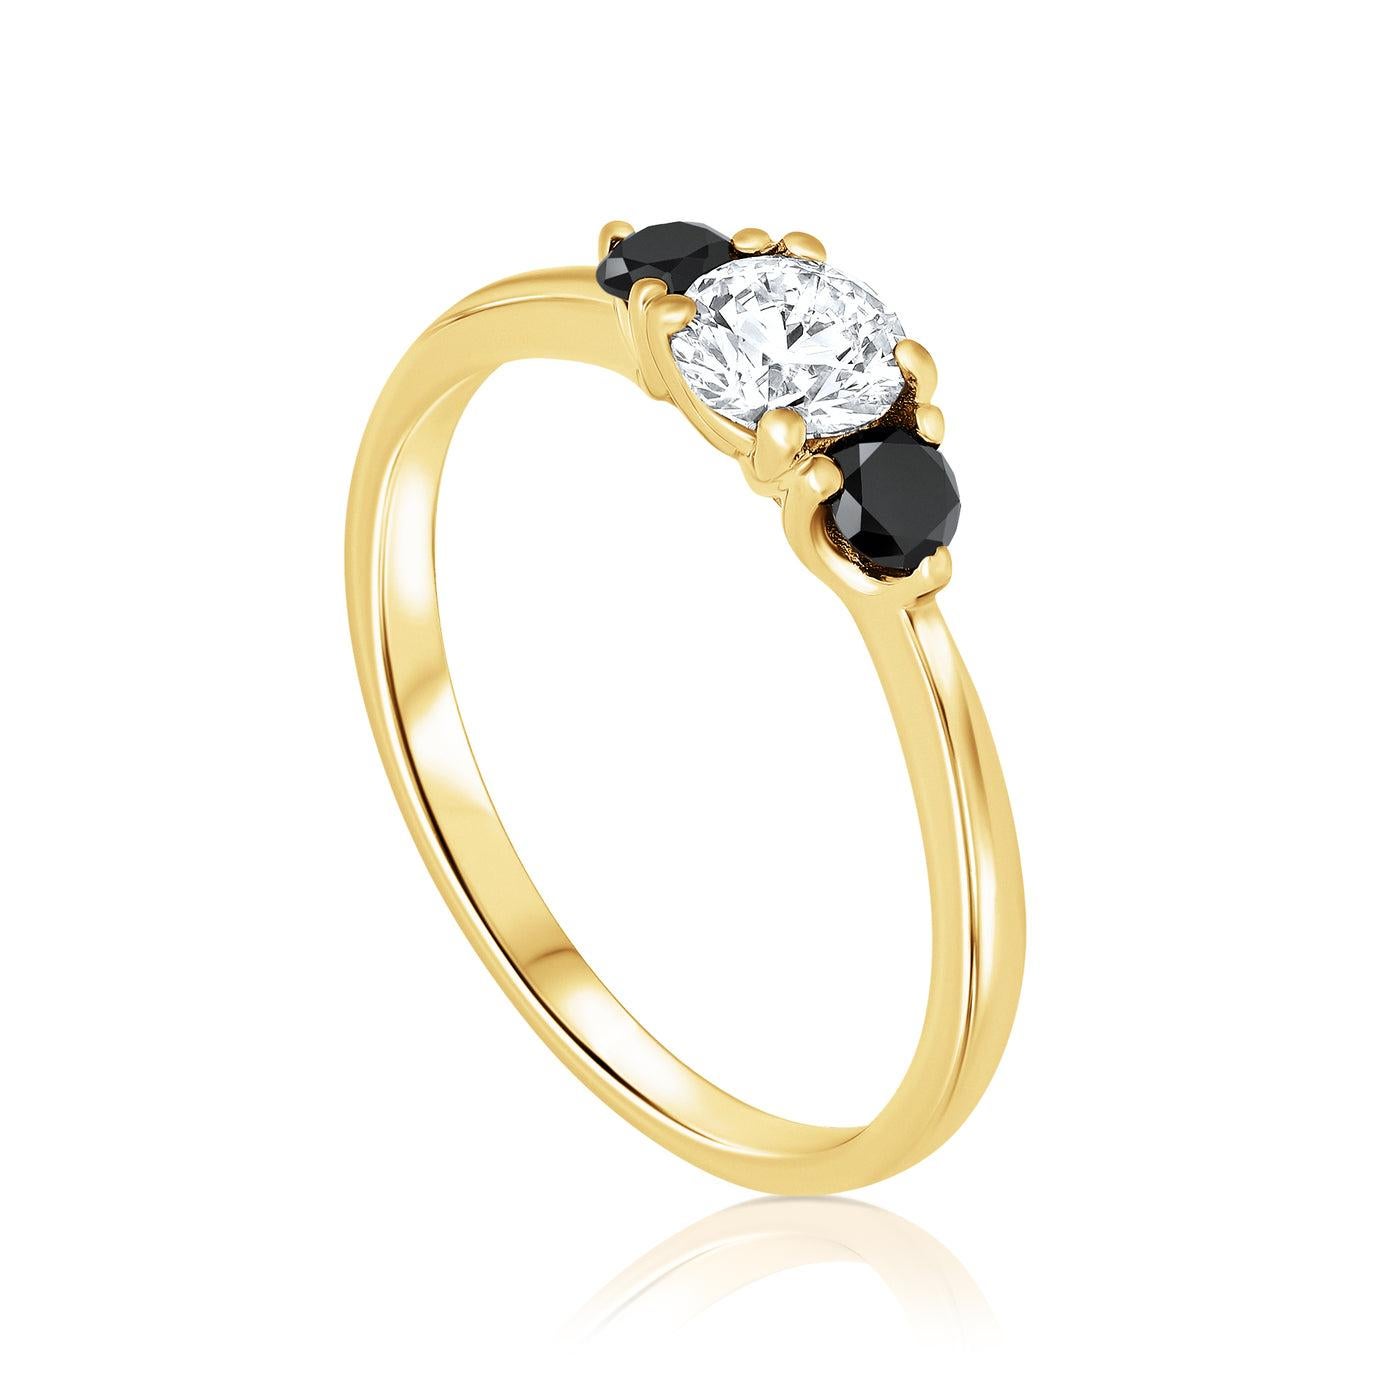 For Sale:  0.40 Carat White and Black Diamond Ring in 14 Karat Yellow Gold, Shlomit Rogel 2